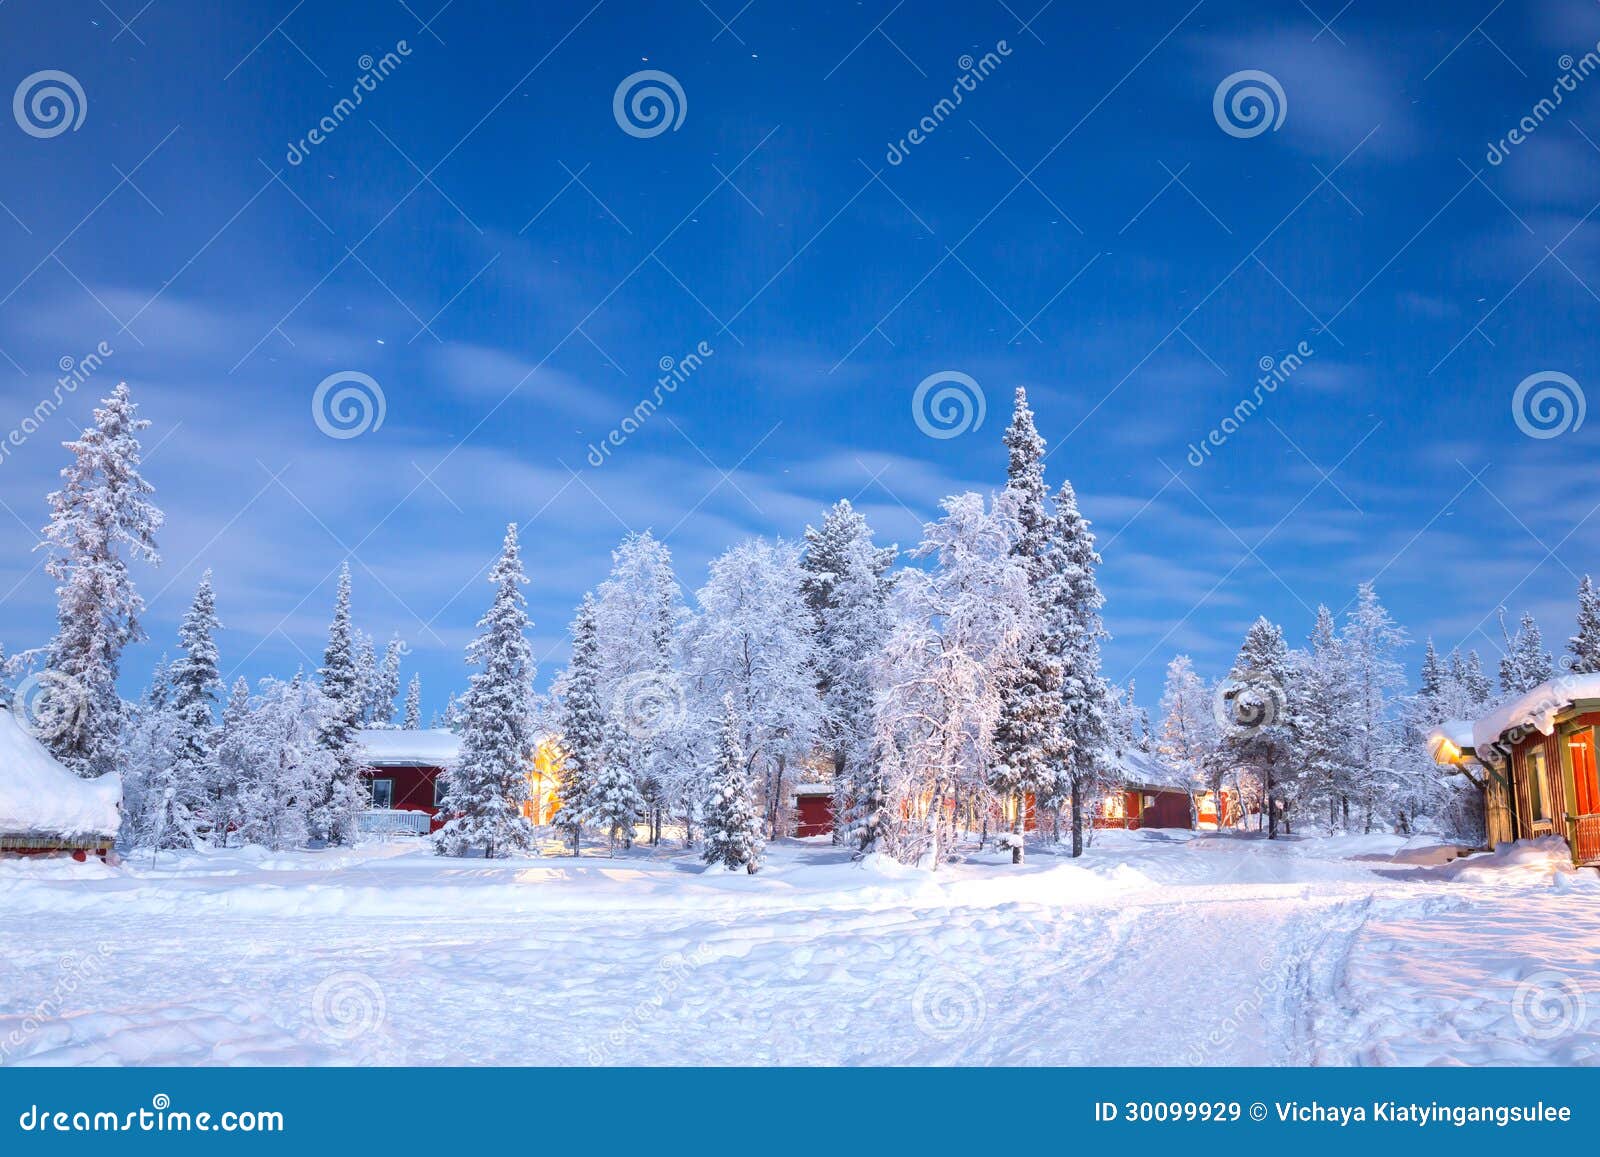 winter landscape sweden lapland